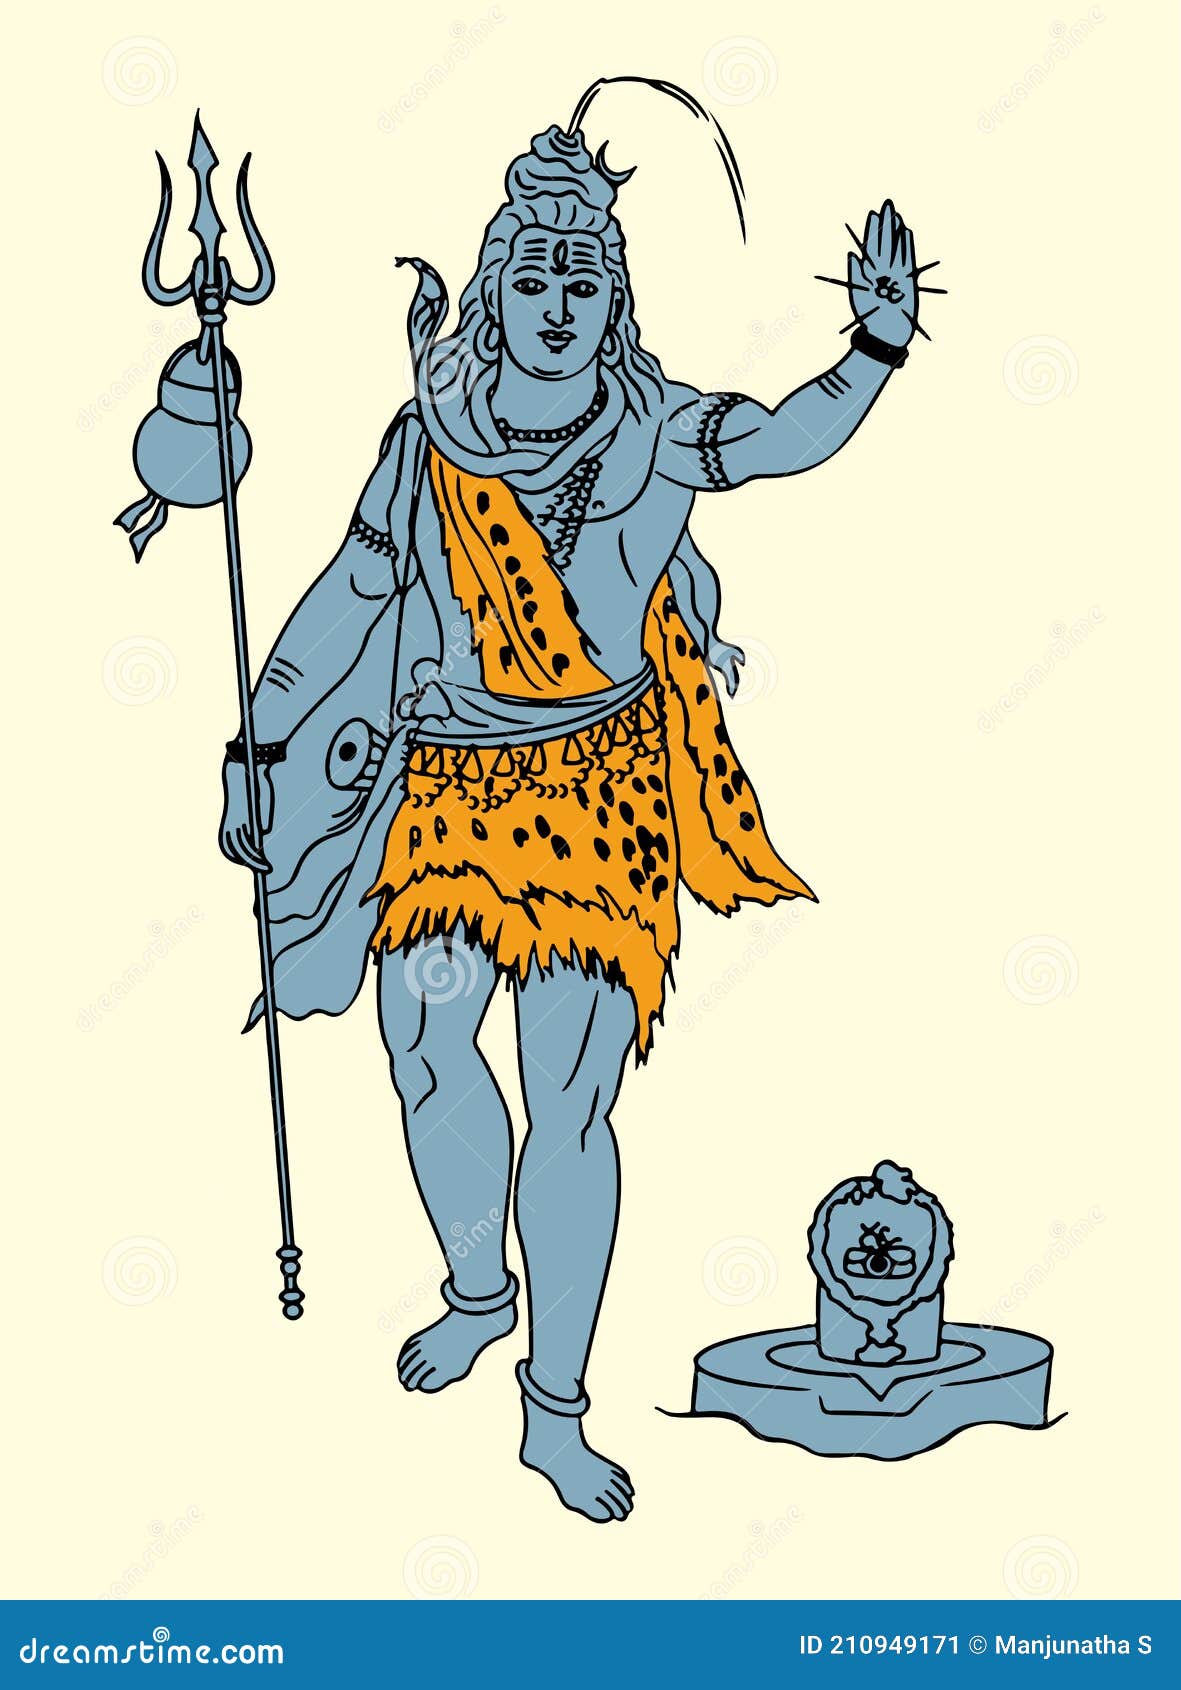 Saurabh Singh Rajput - Lord Shiva illistration